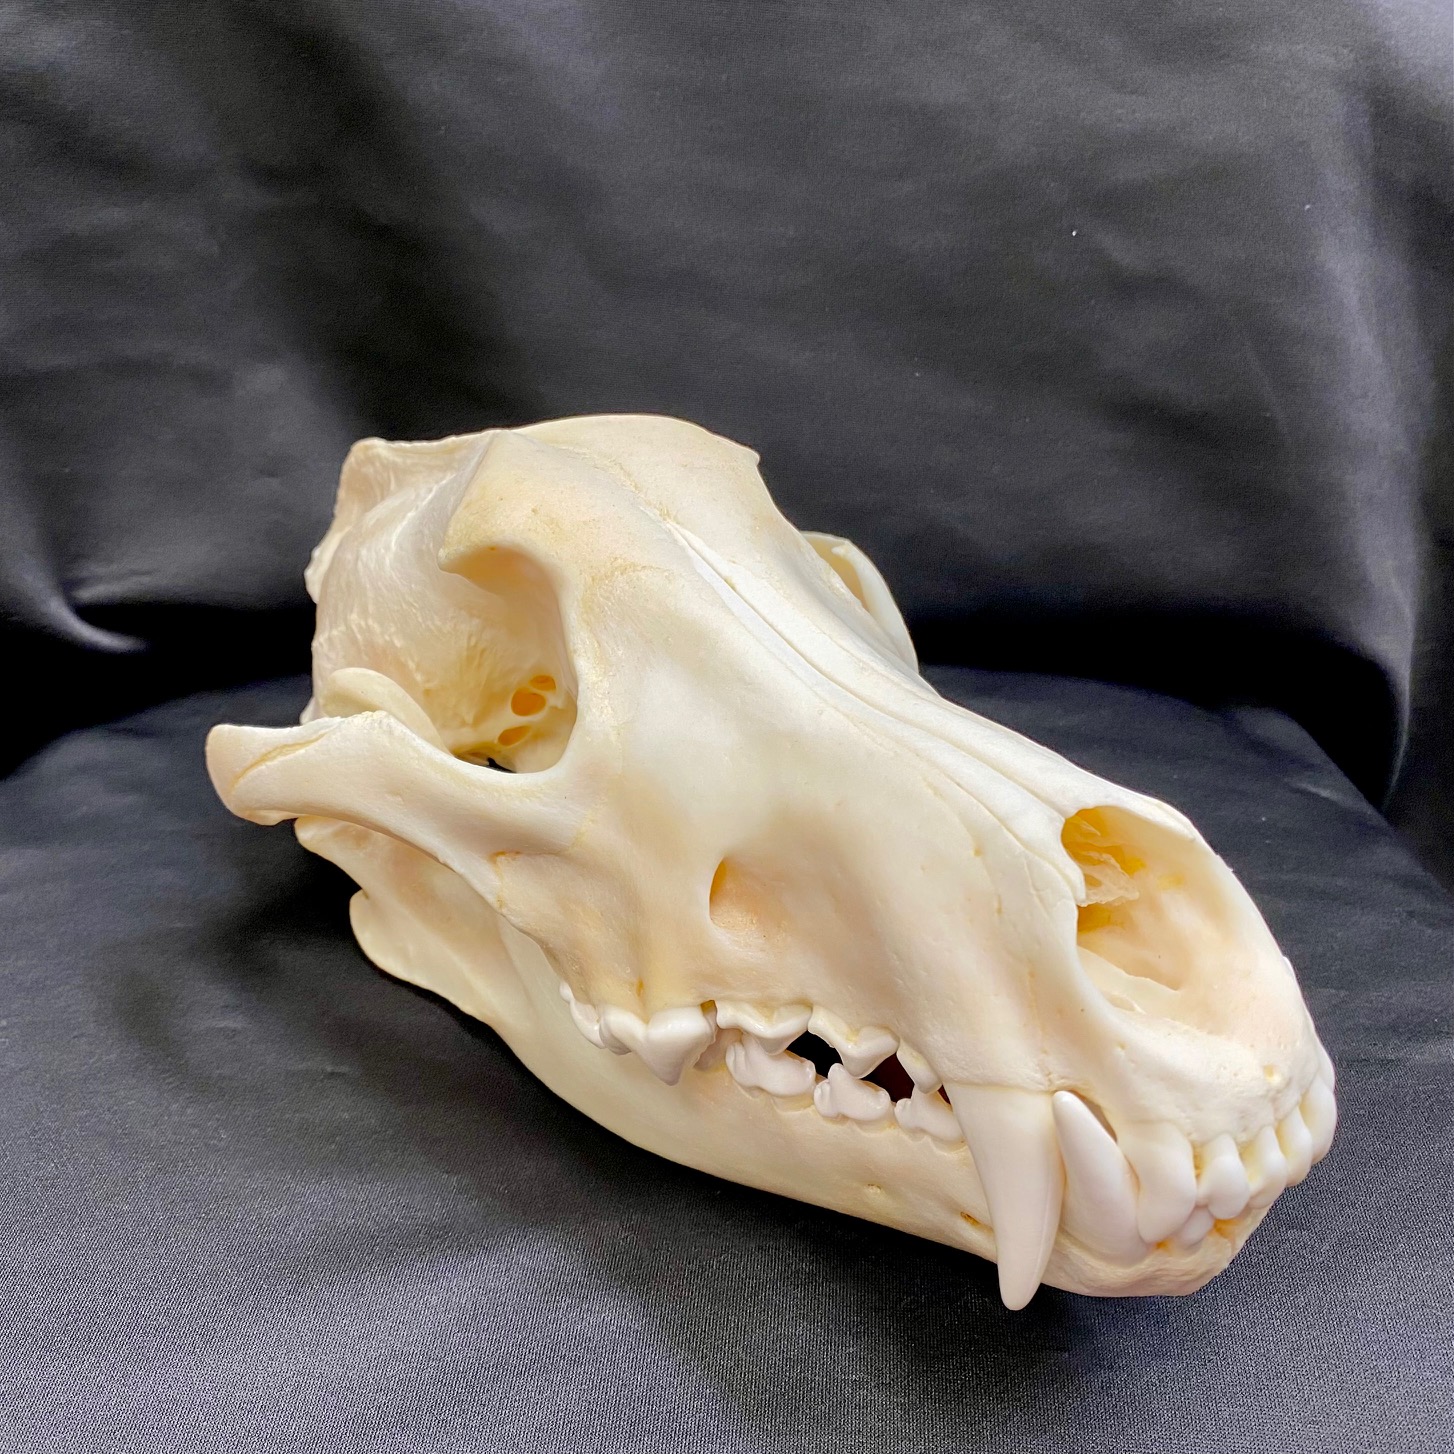 wolf skull measurements